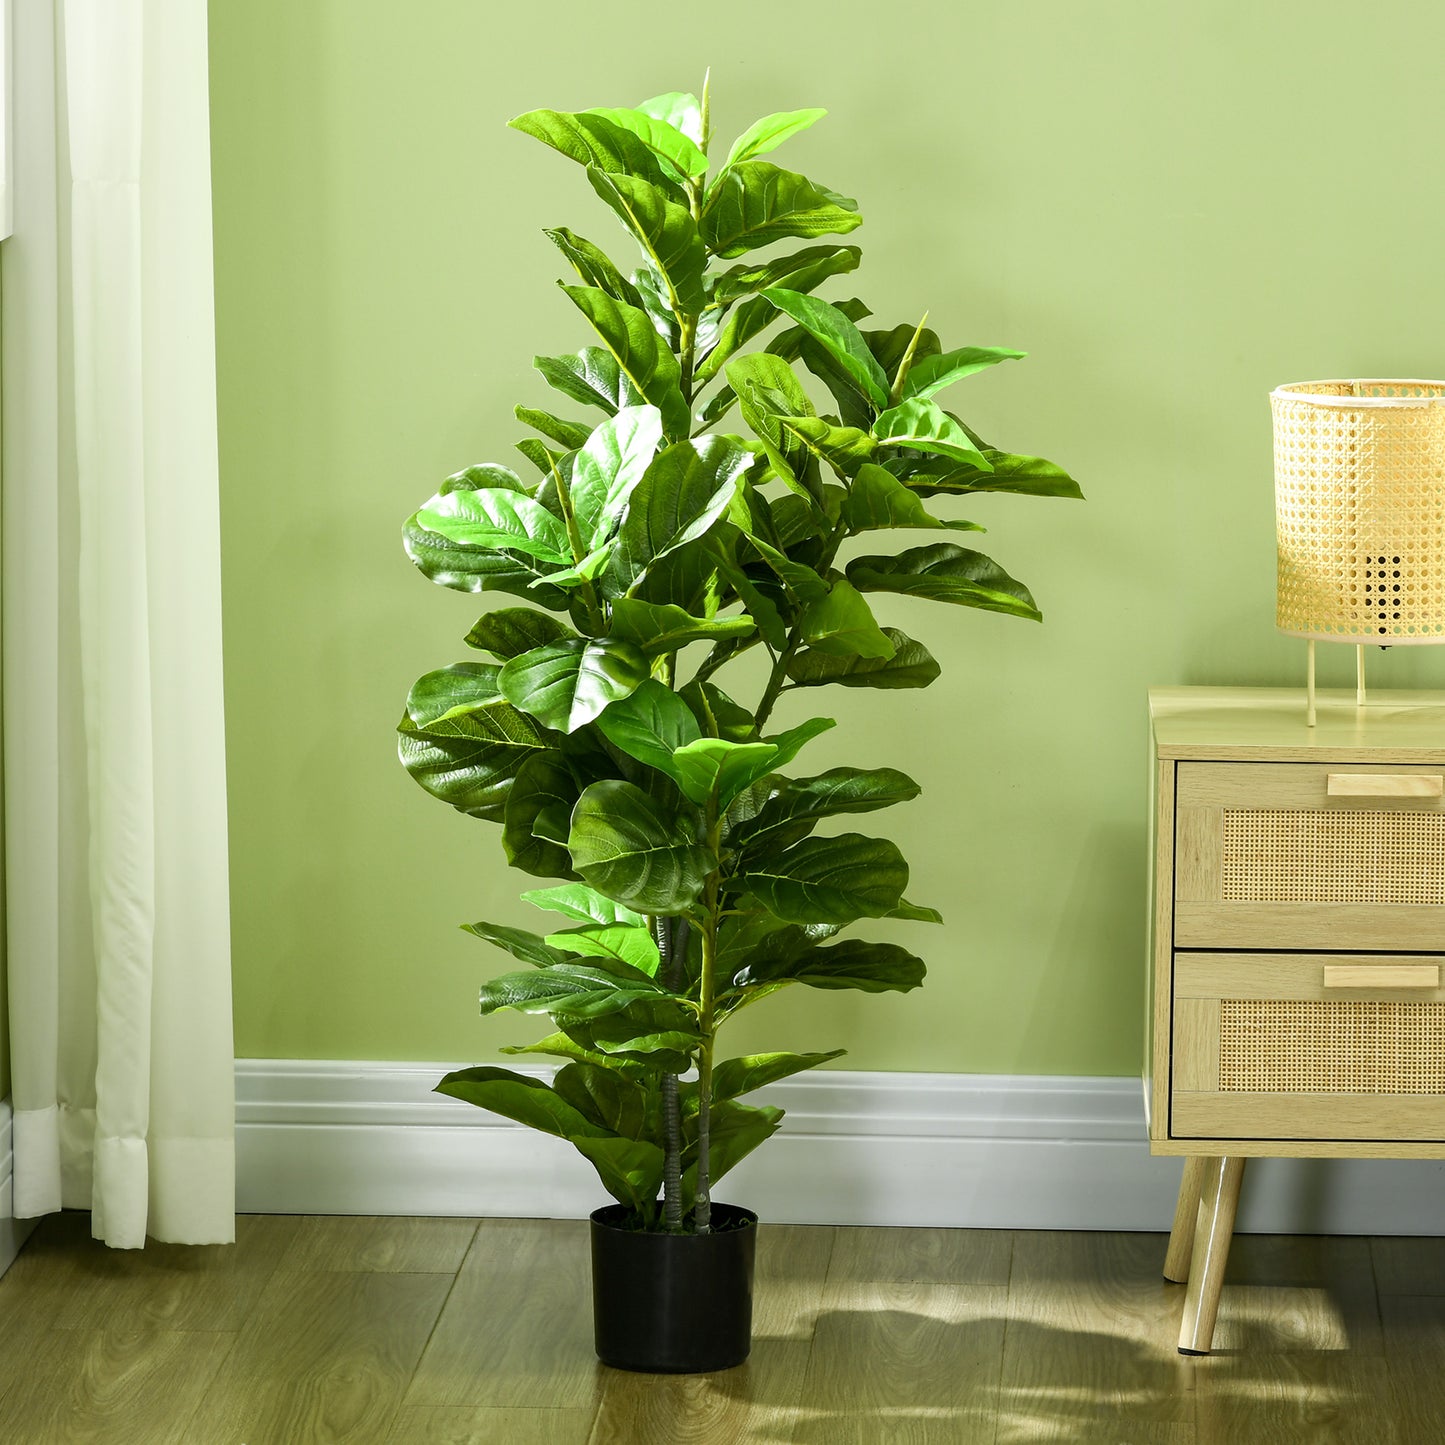 HOMCOM Planta Ficus Artificial 110 cm Árbol Artificial con 90 Hojas Musgo y Maceta Planta Artificial Decorativa para Interior y Exterior Hogar Salón Verde